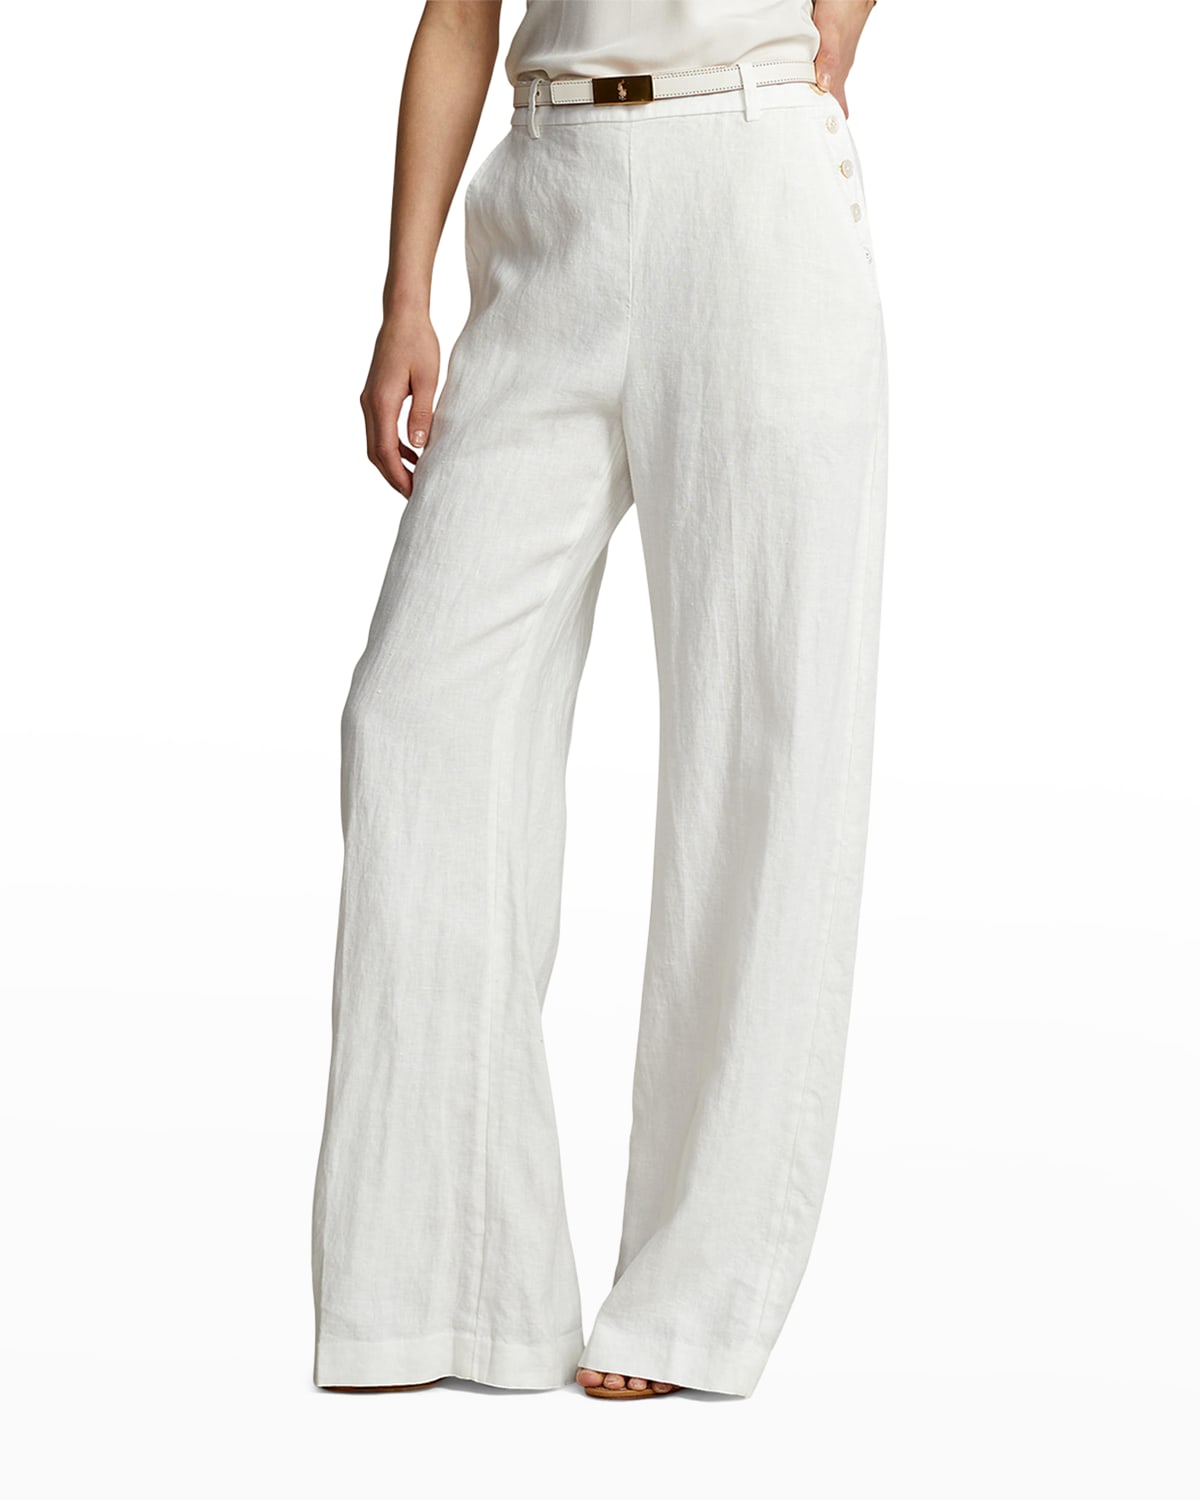 Womens White Pants | Neiman Marcus